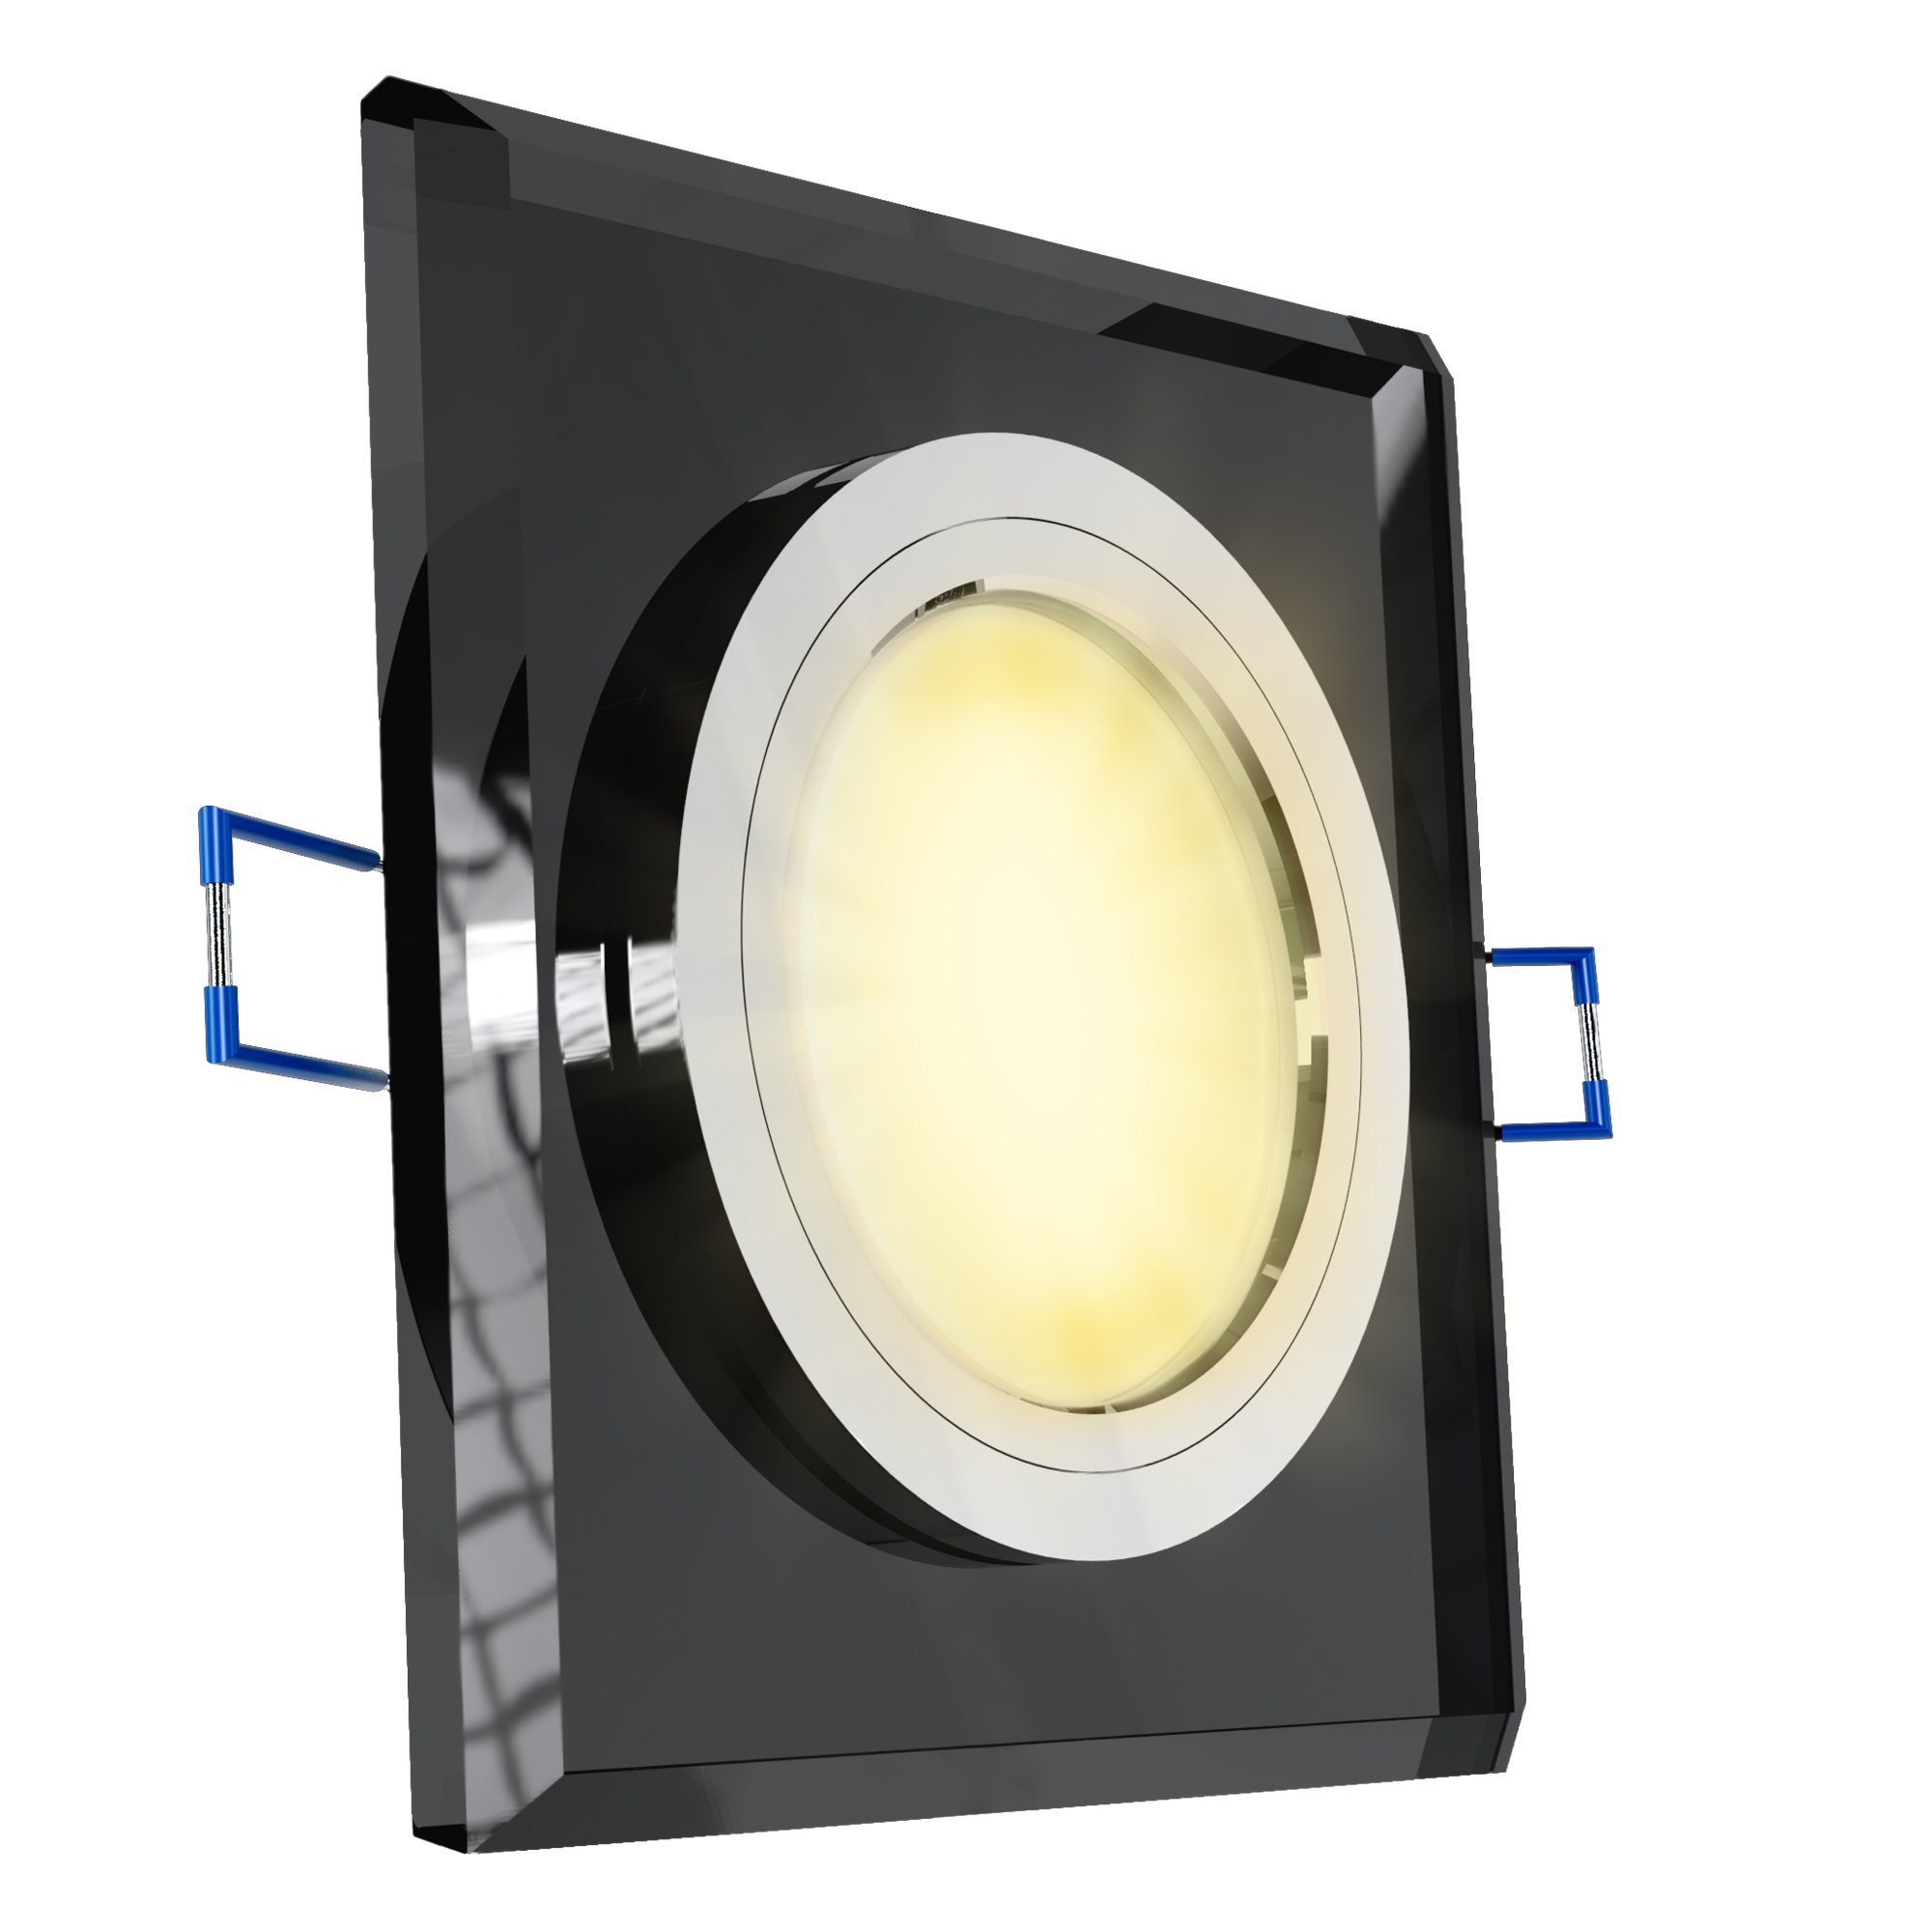 SSC-LUXon LED Einbaustrahler Flacher LED Einbaustrahler aus Glas eckig schwarz mit LED Modul 230V, Warmweiß